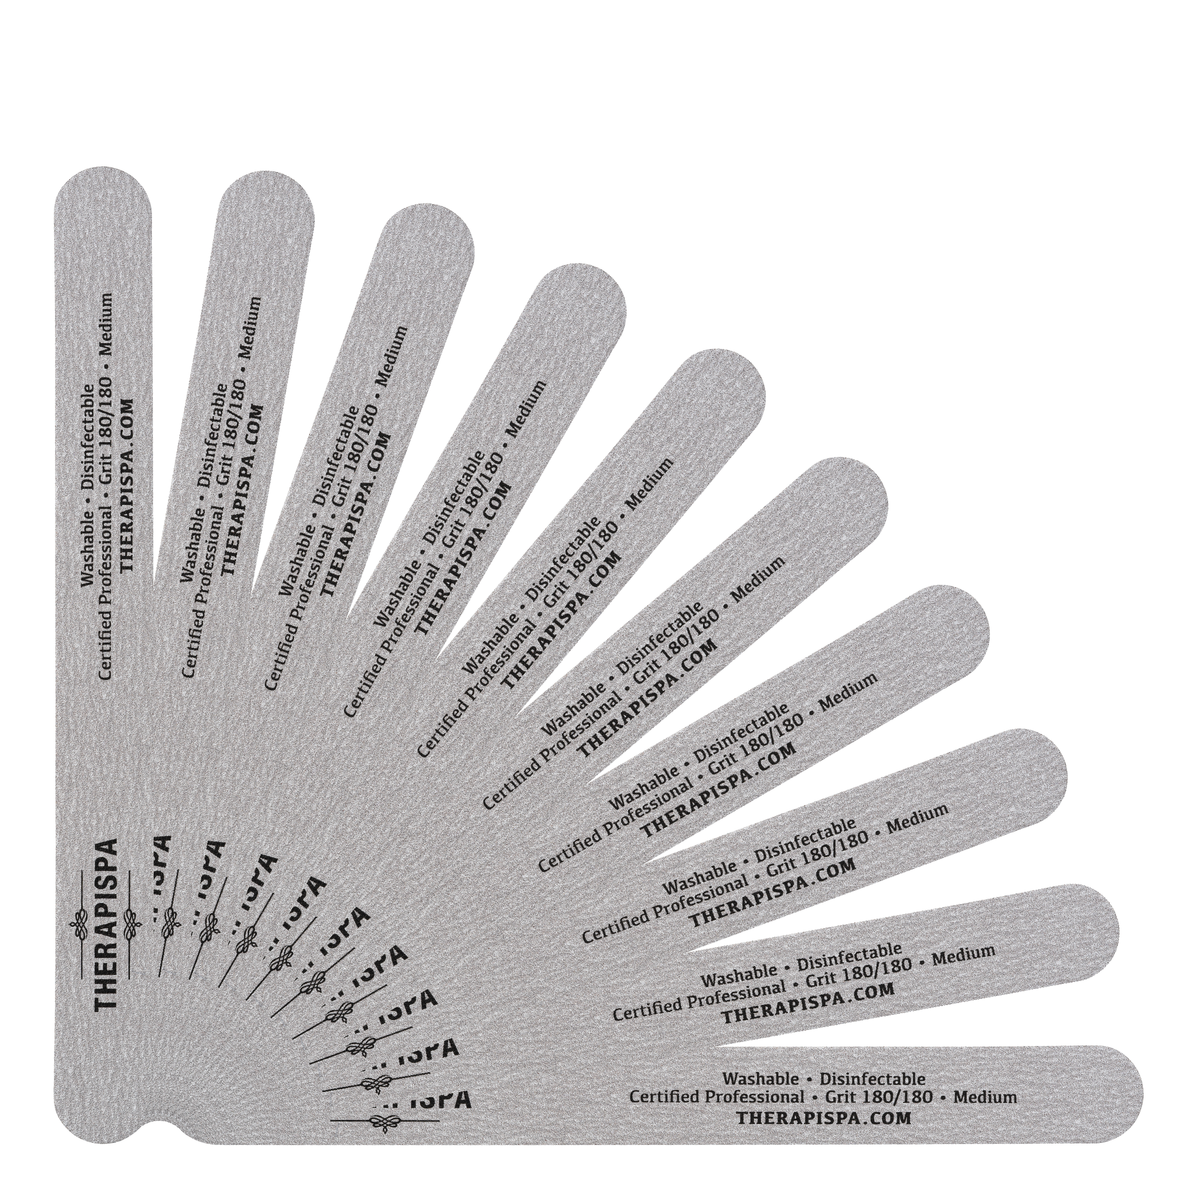 Premium JAPAN Abrasive Zebra Nail File (180/180 Grit) - Medium / 10 packs